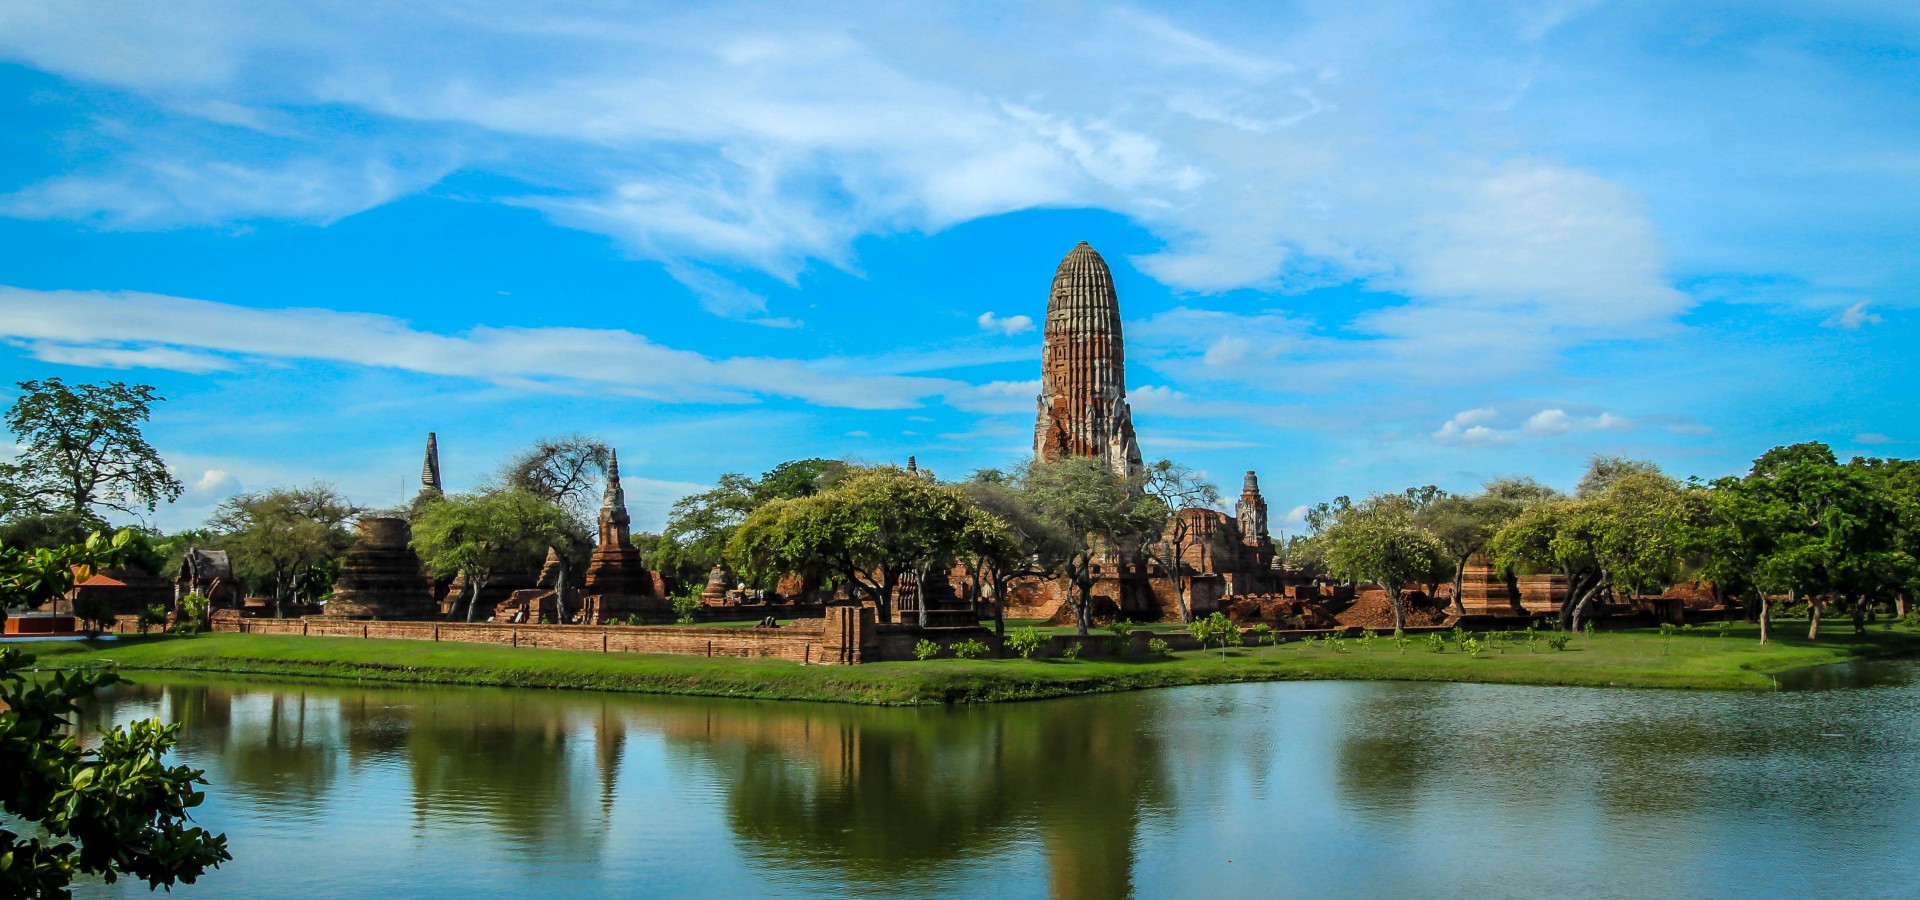 Ayutthaya: must visit hidden treasures of Thailand